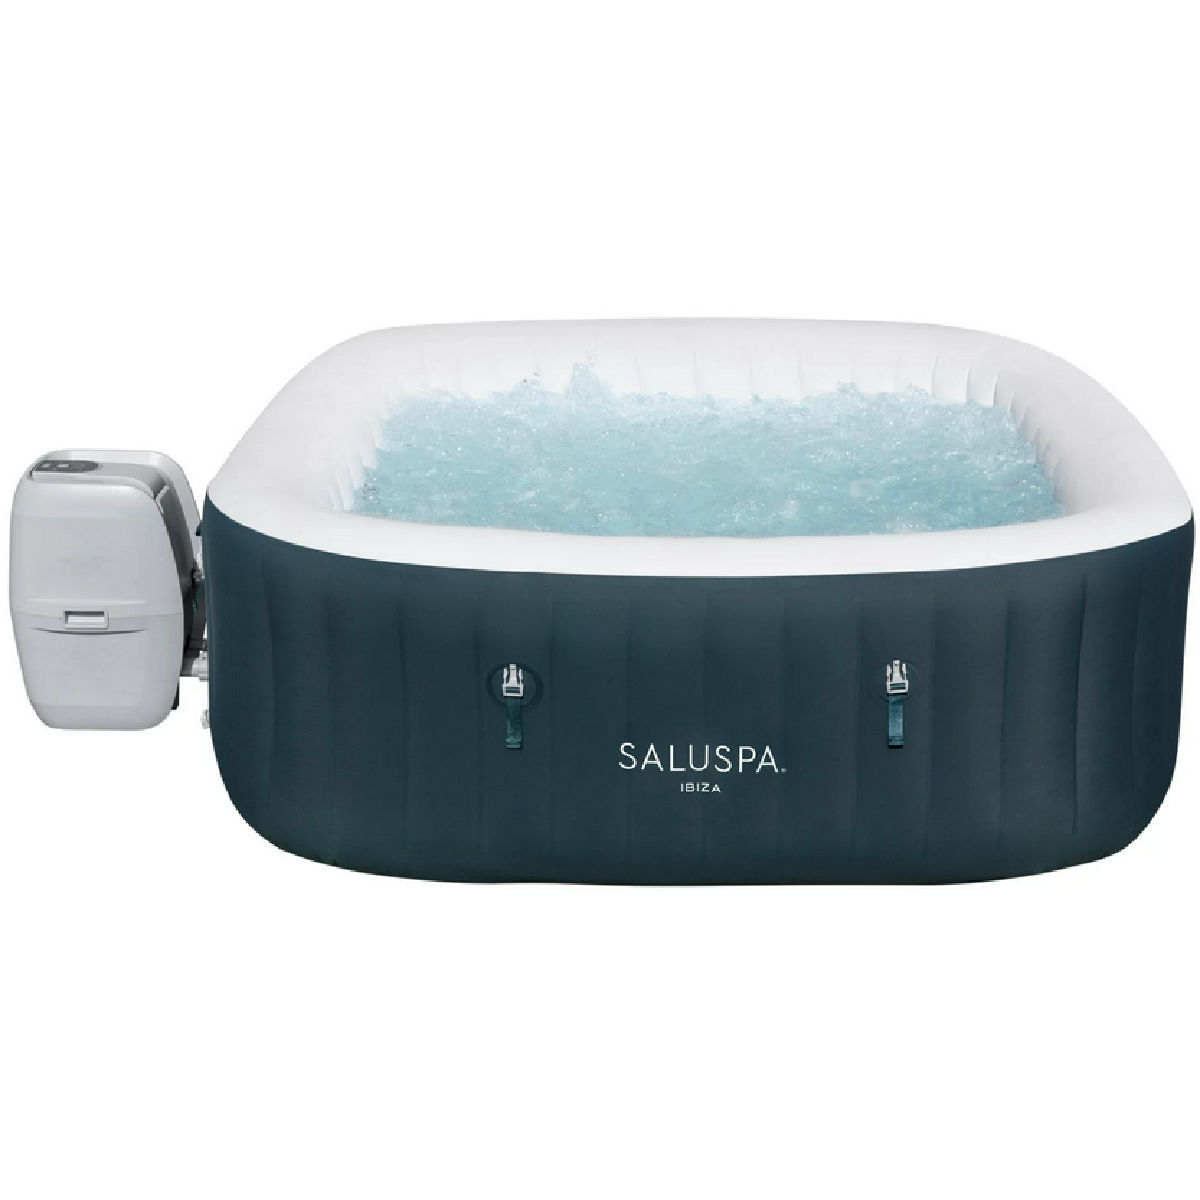 SaluSpa Ibiza AirJet Inflatable Hot Tub Spa